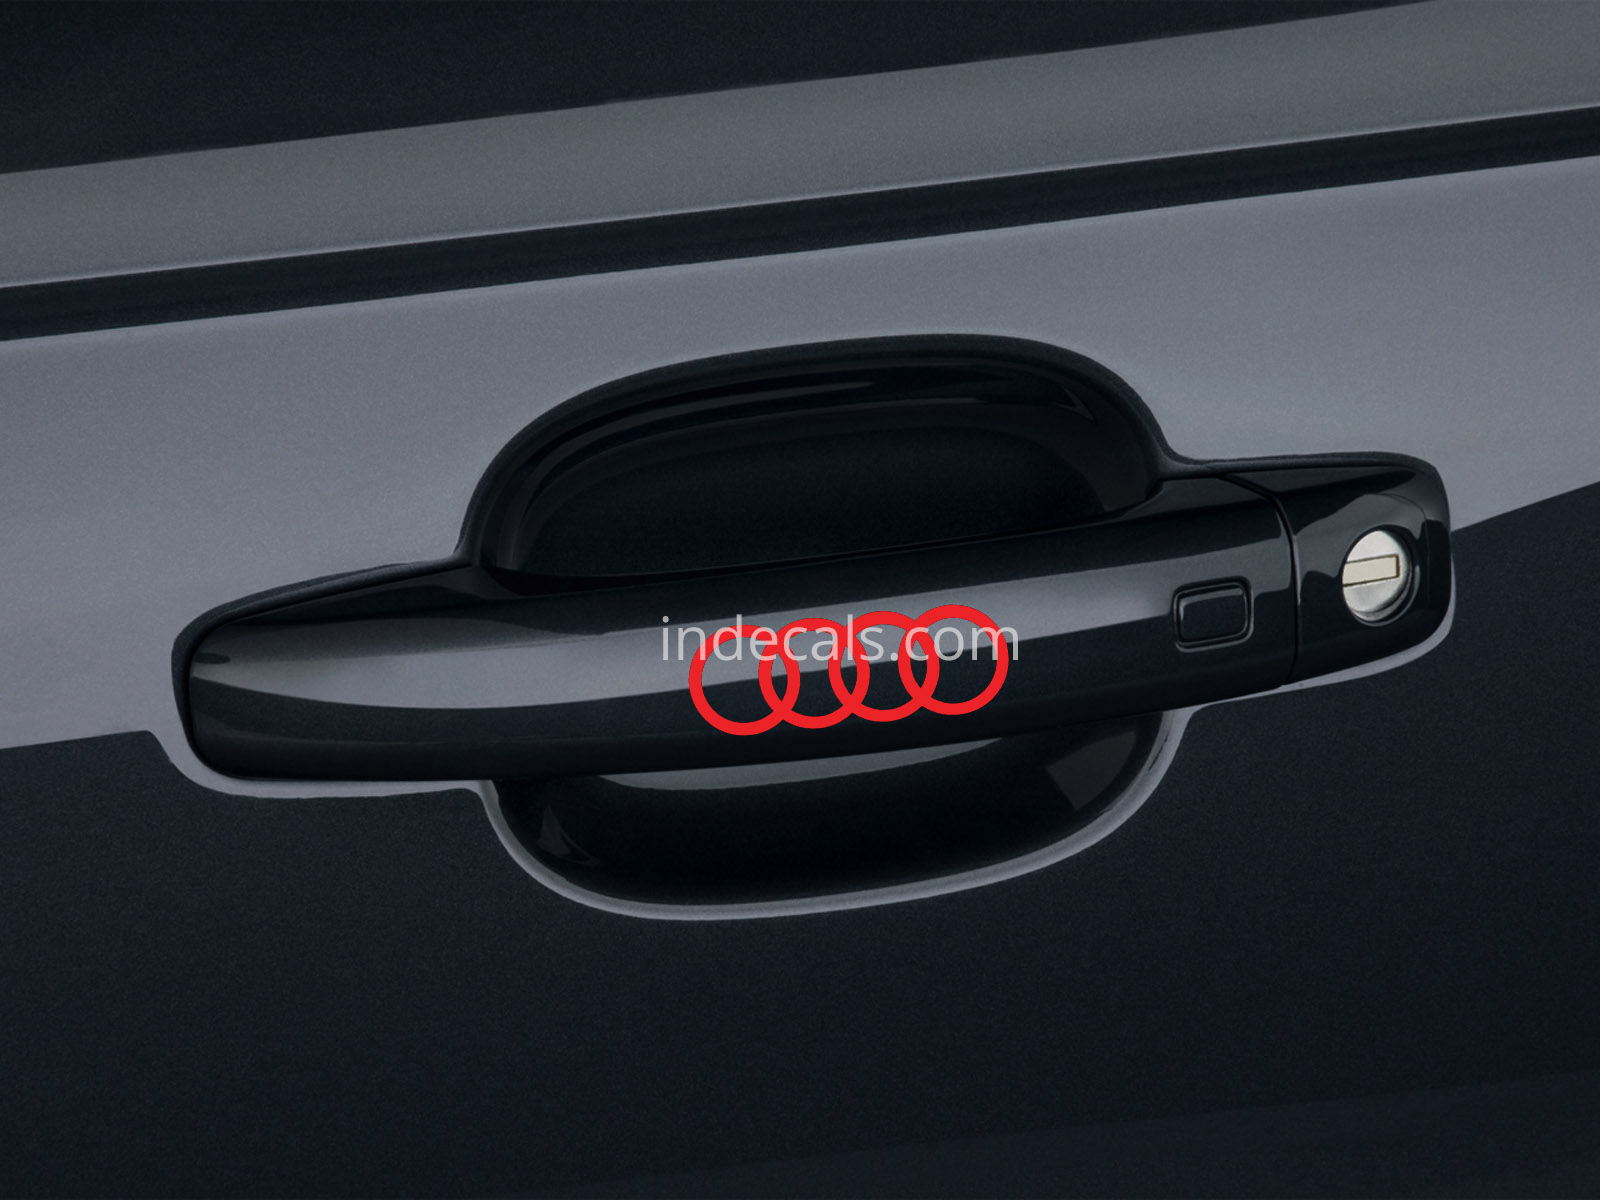 6 x Audi Rings Stickers for Door Handles - Red